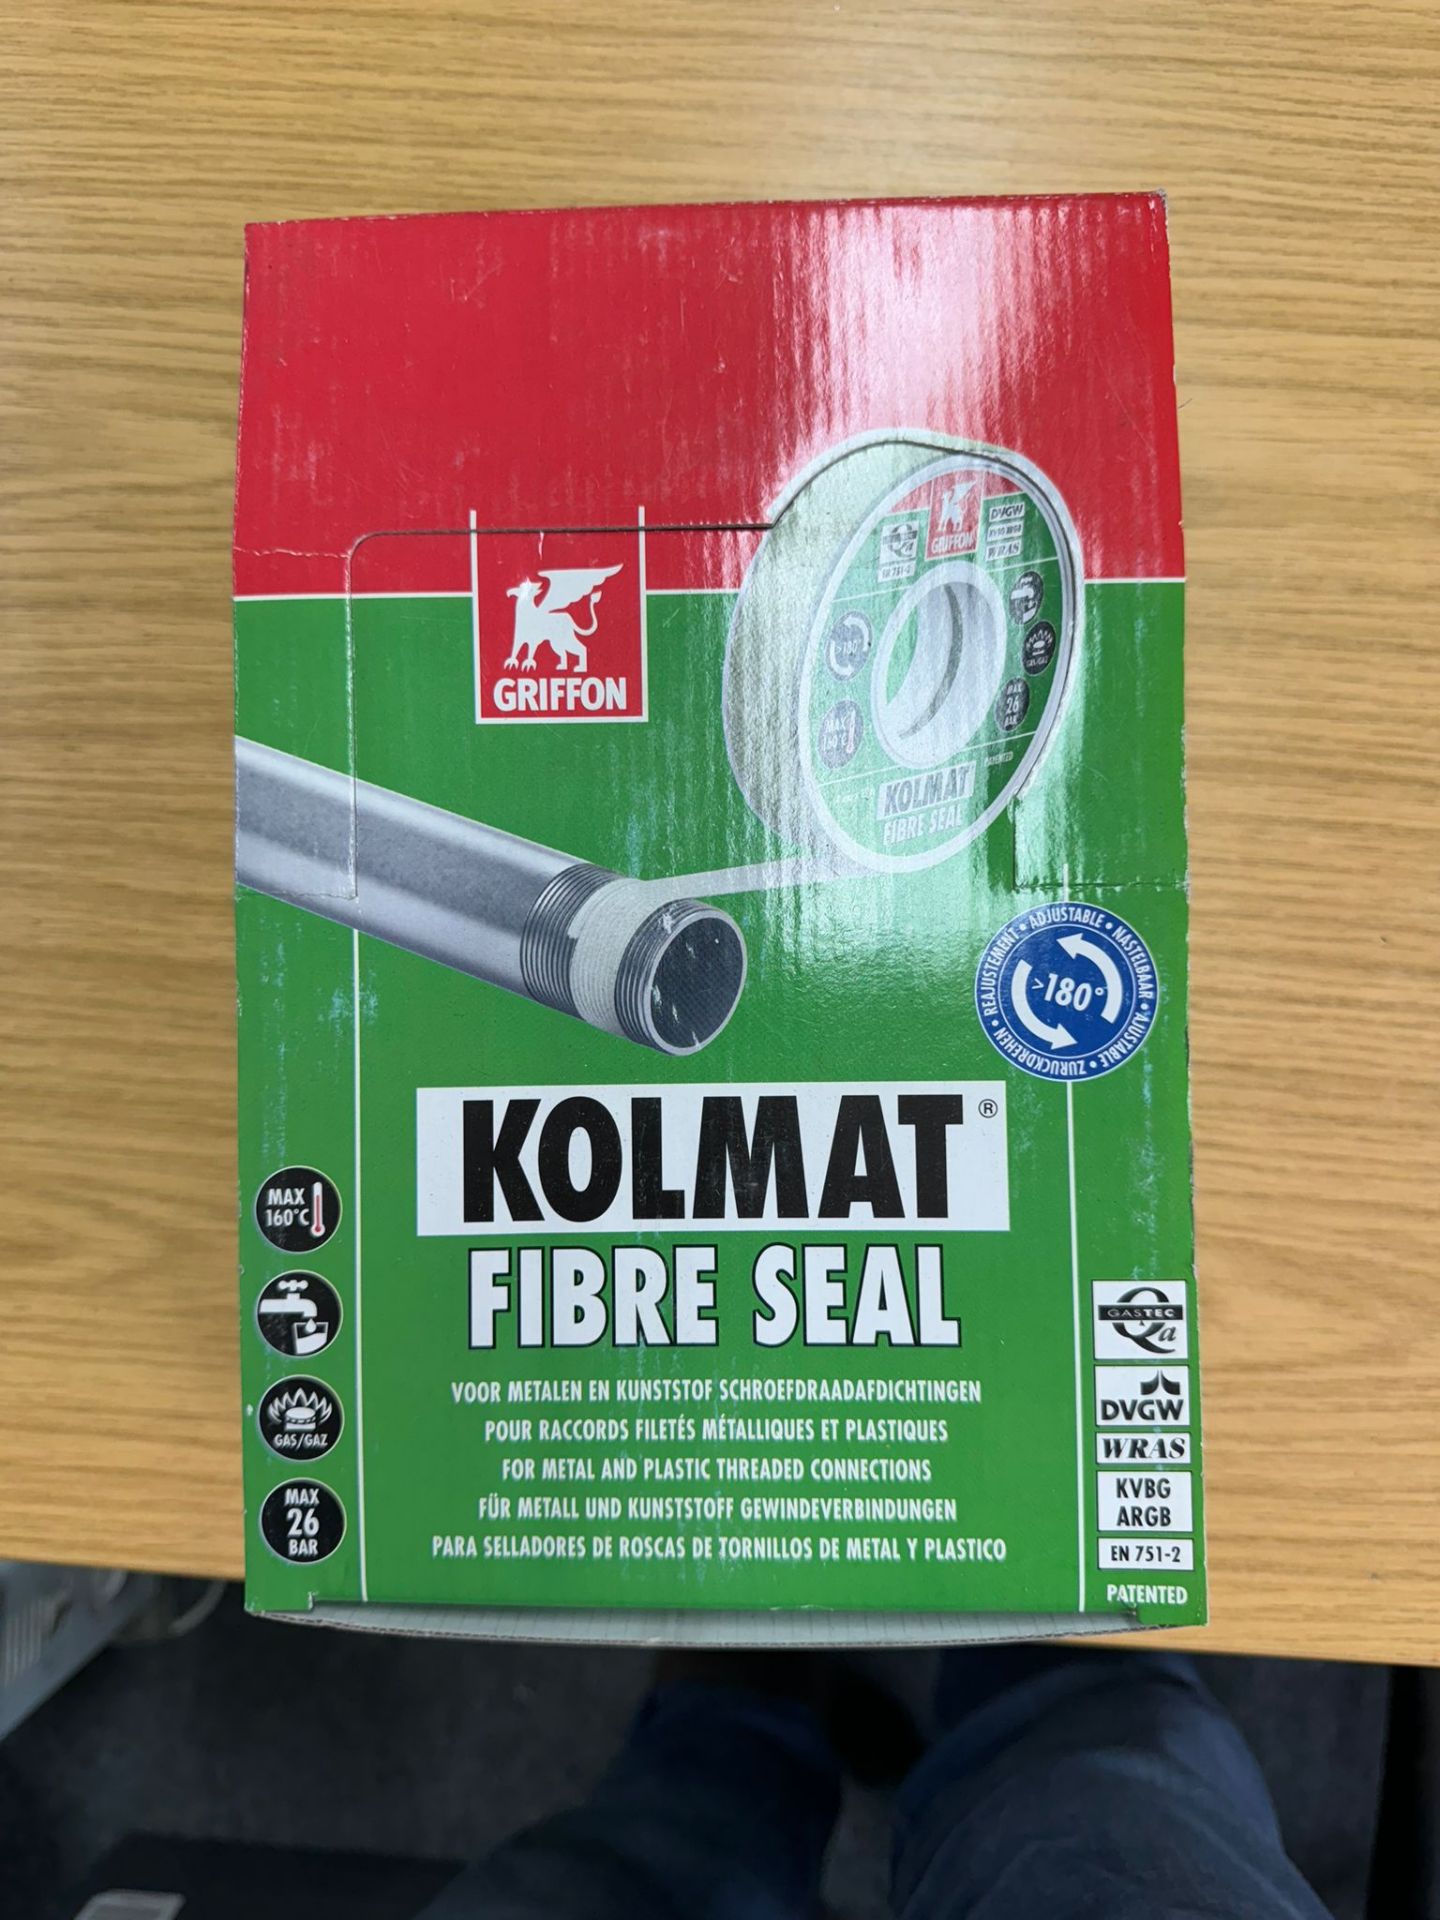 Box kolmat fibre seal contains 30 rolls - Image 3 of 5